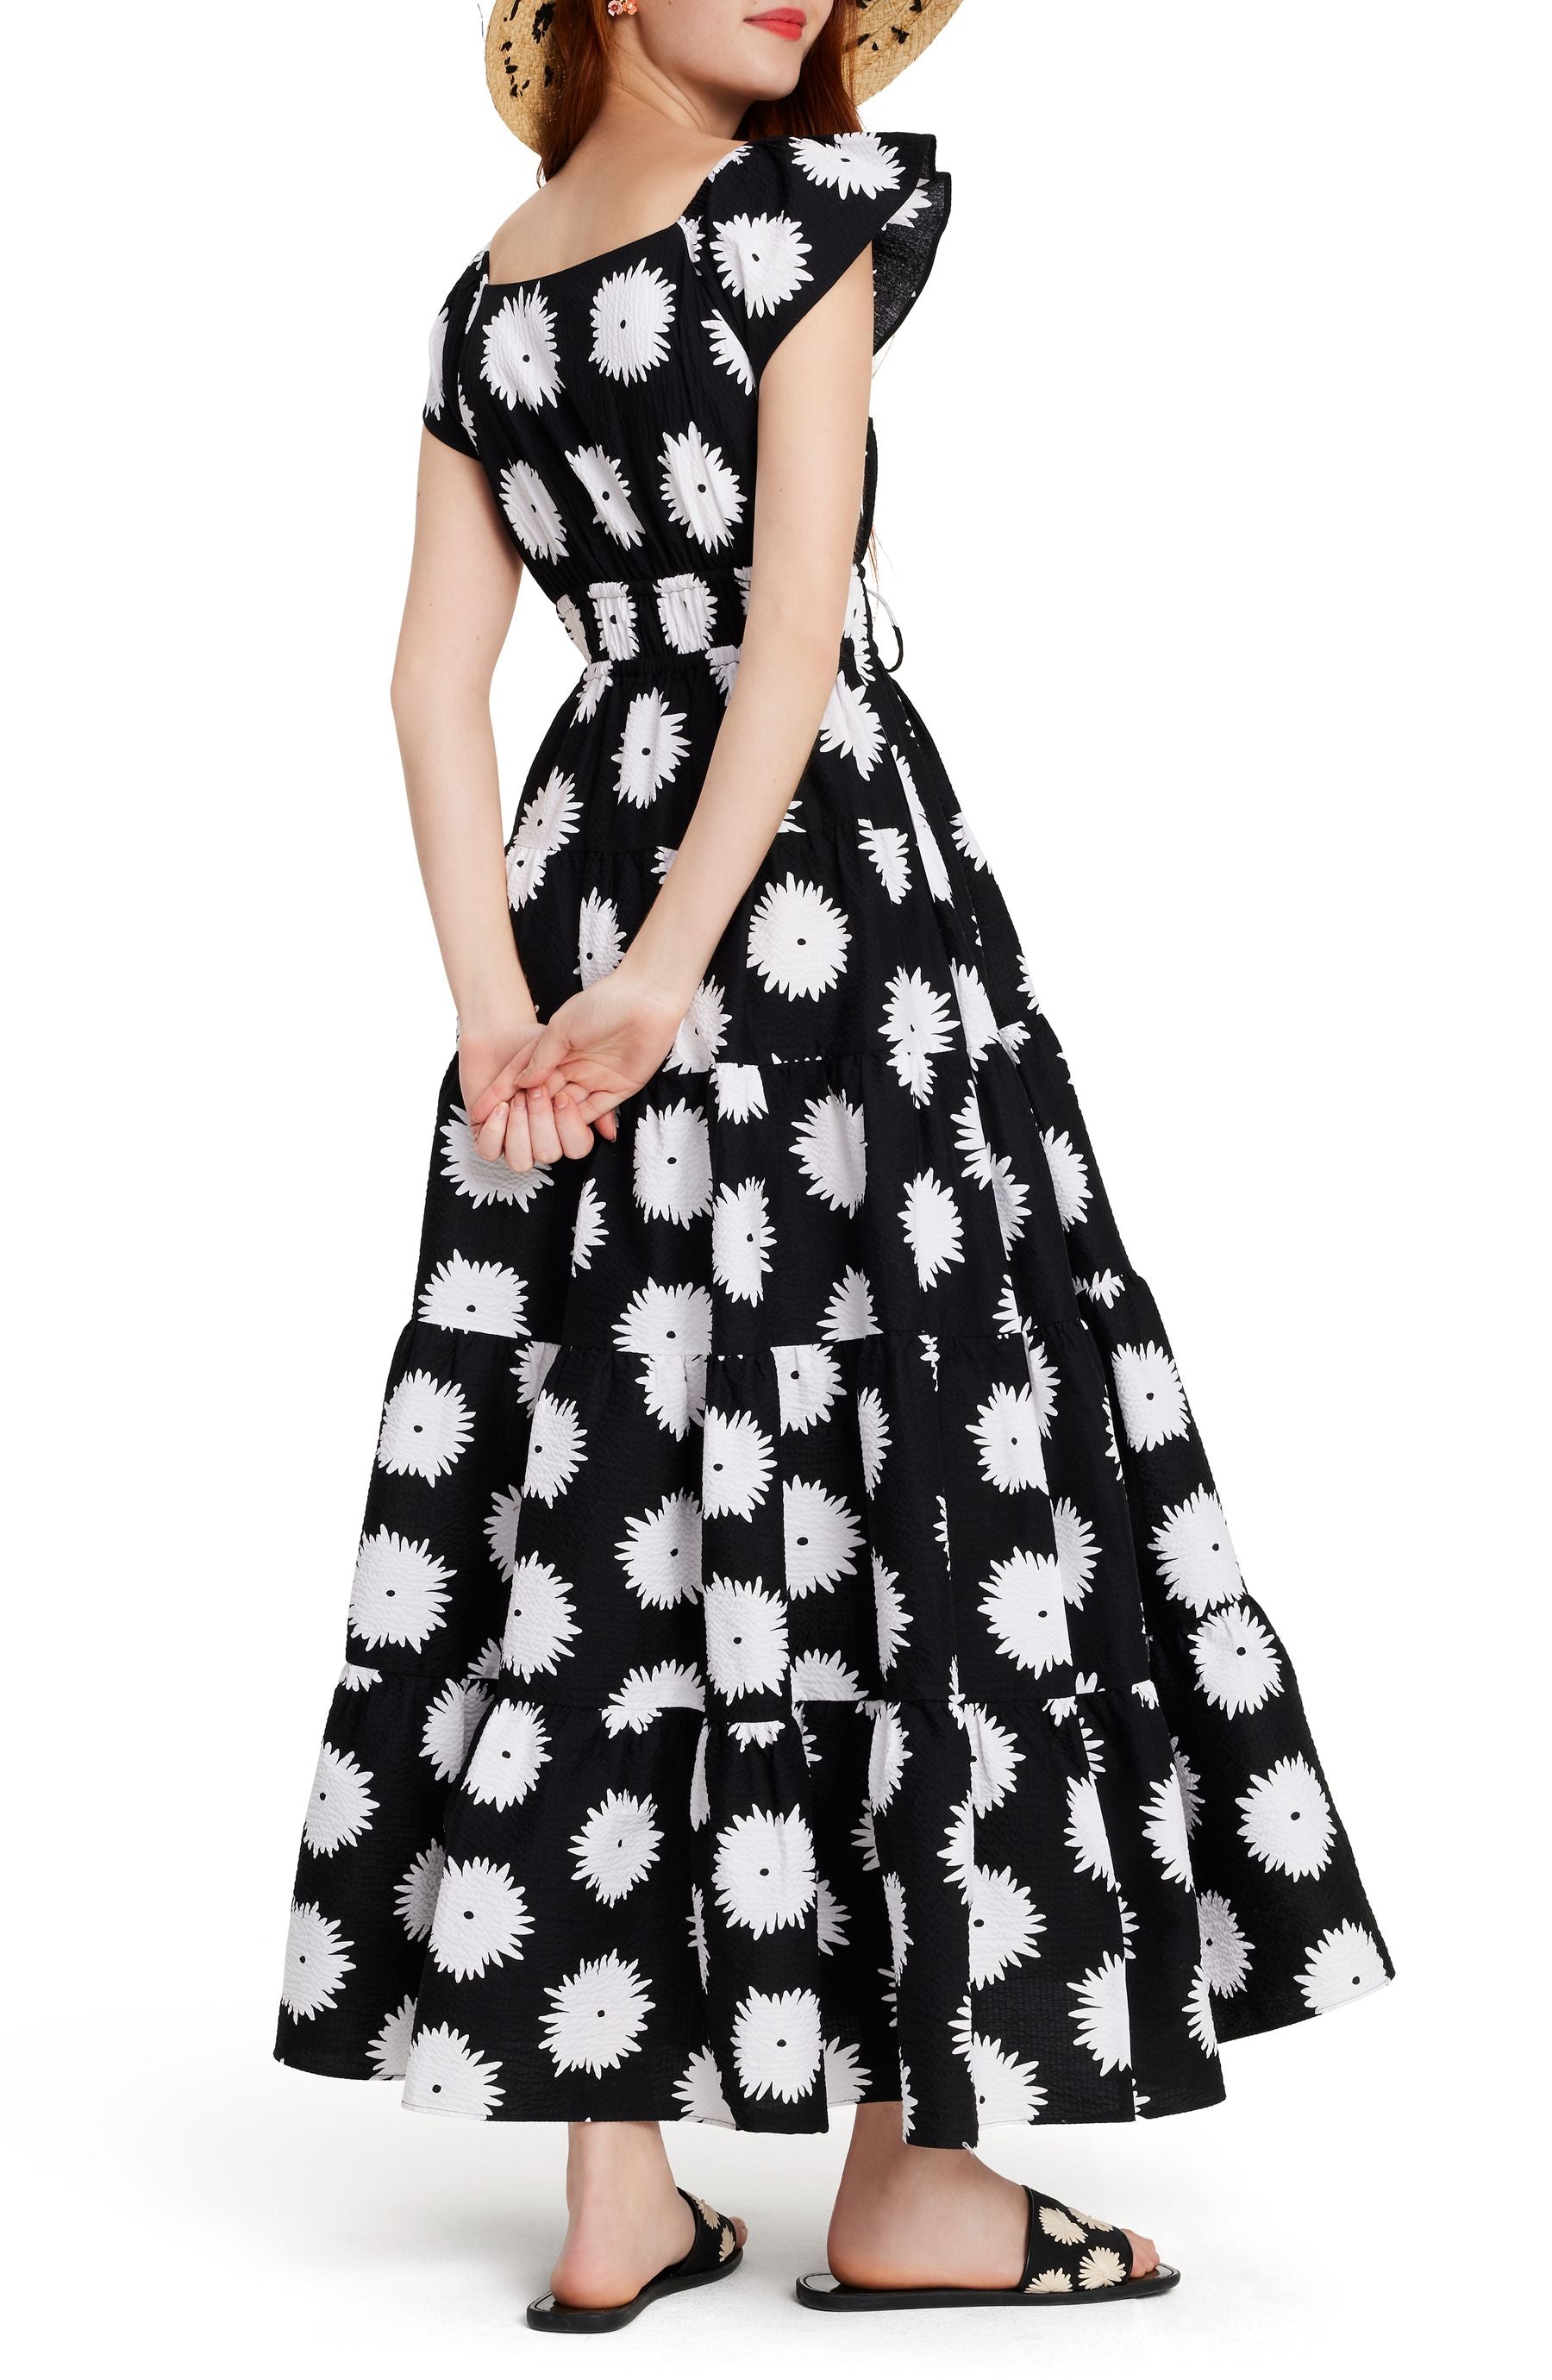 KF765_Pom pom Floral Smocked Dress_Black/Cream